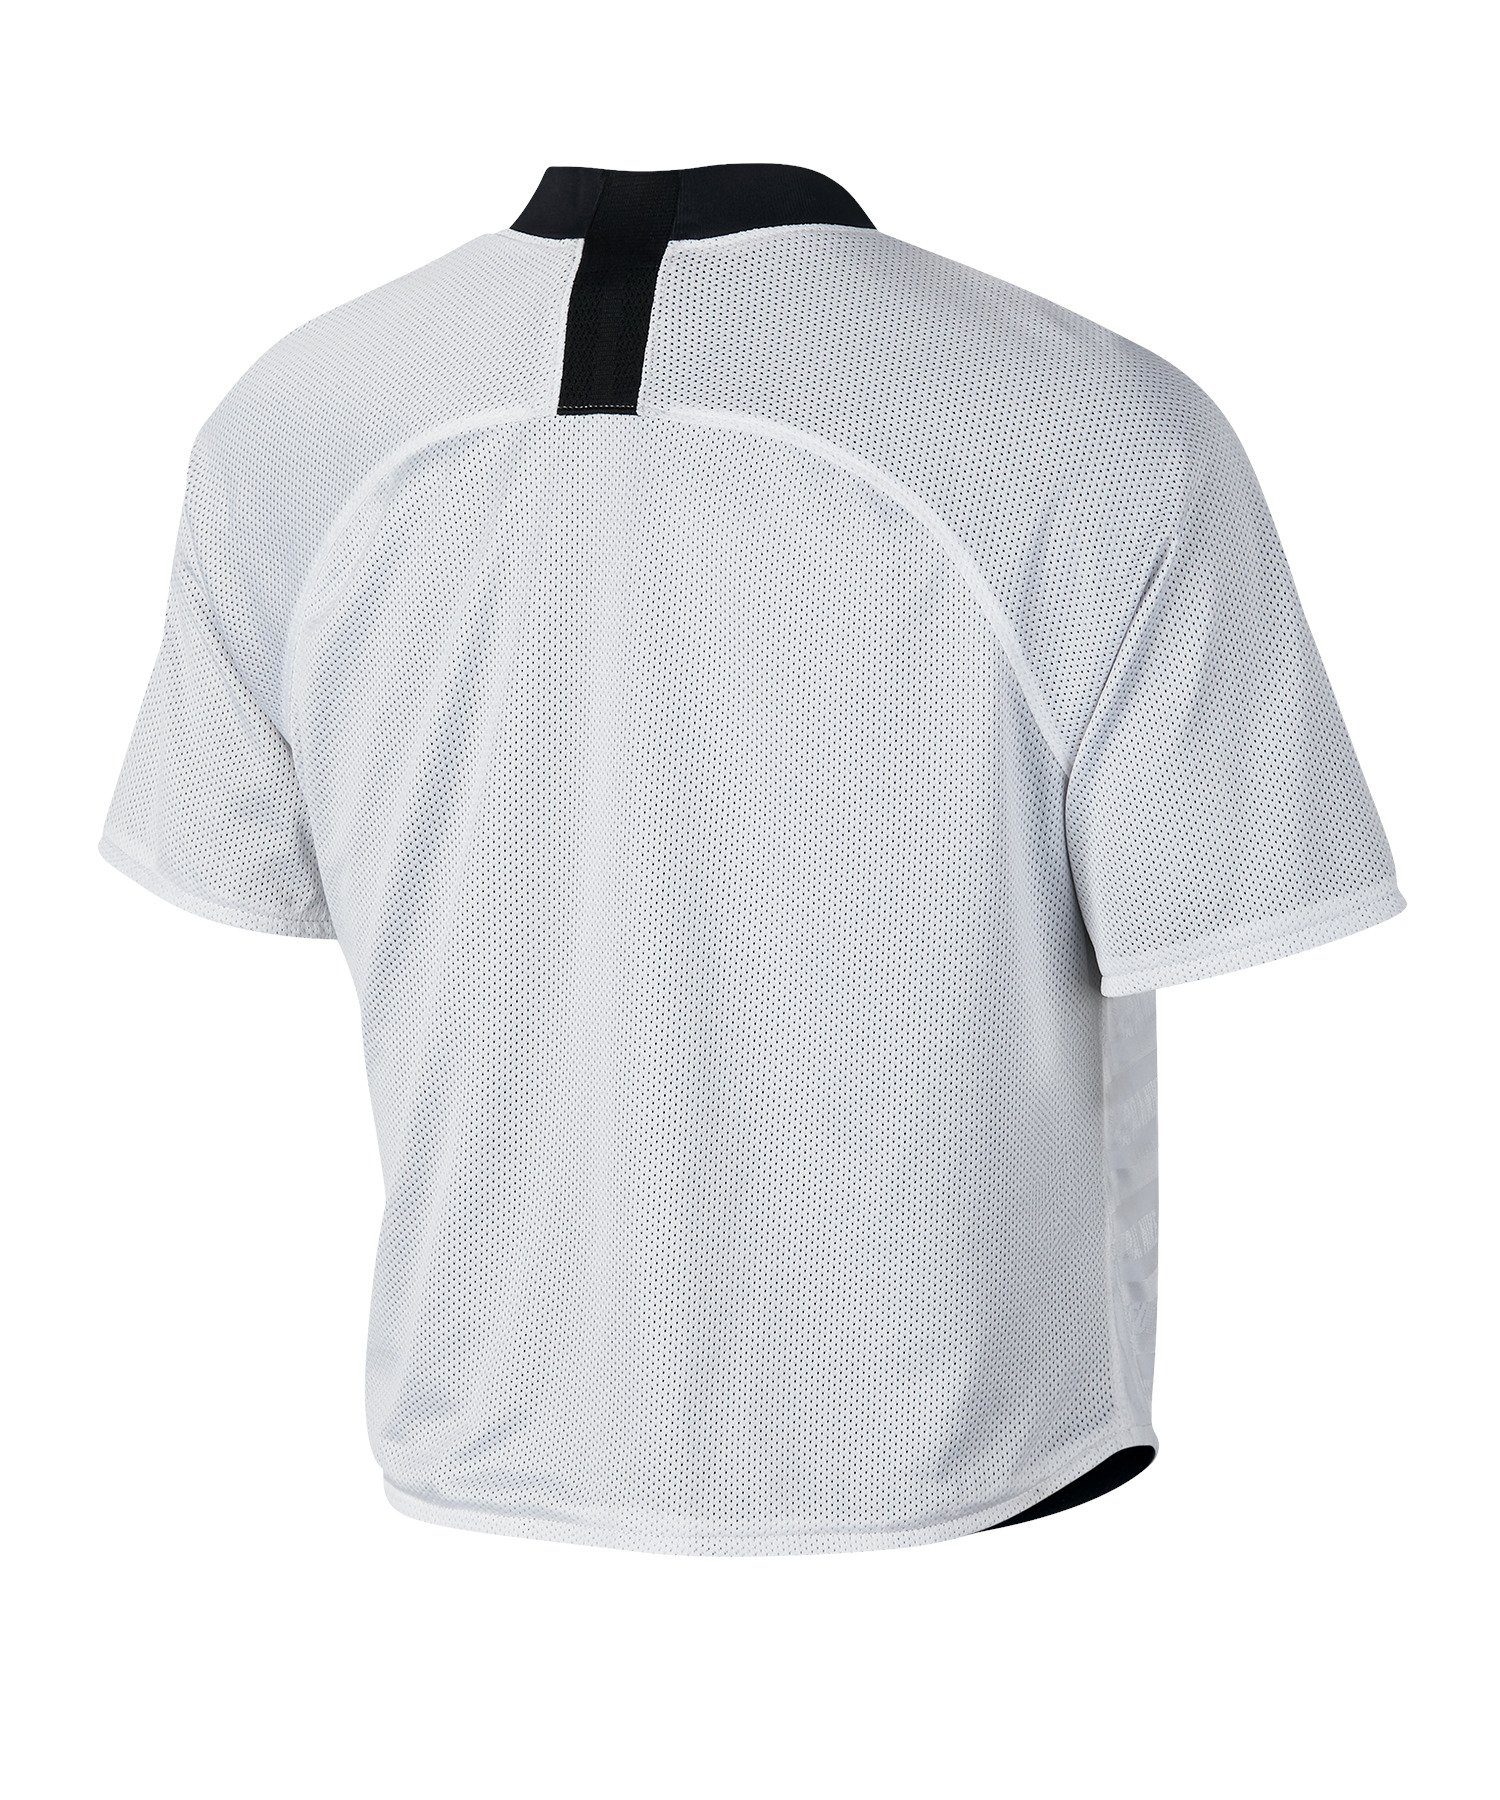 Nike Sportswear T-Shirt Damen default F.C. Top Schwarz Crop